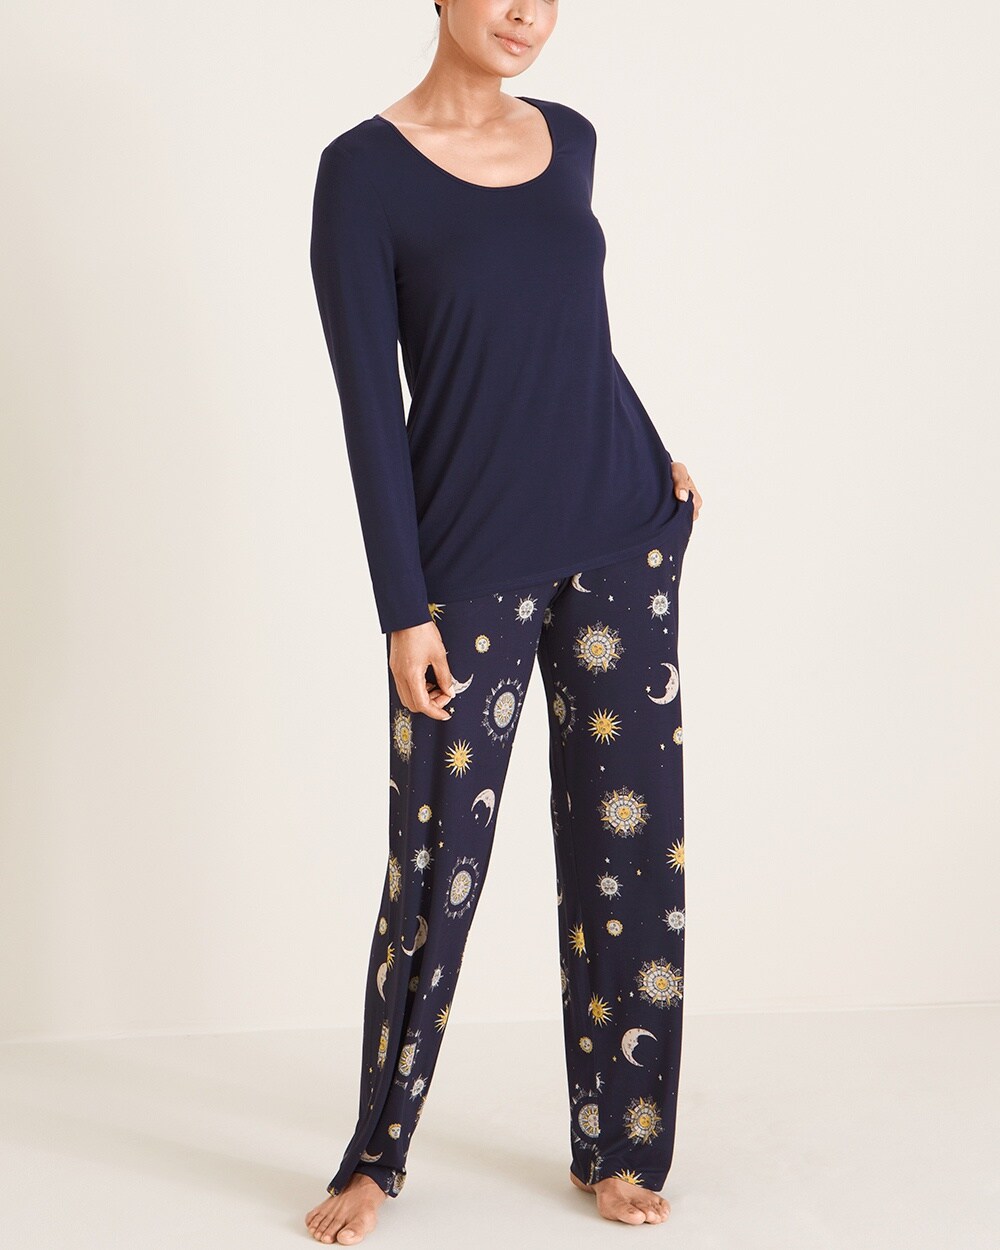 Soma for Chico's Cool Nights Zodiac-Print Pajama Set